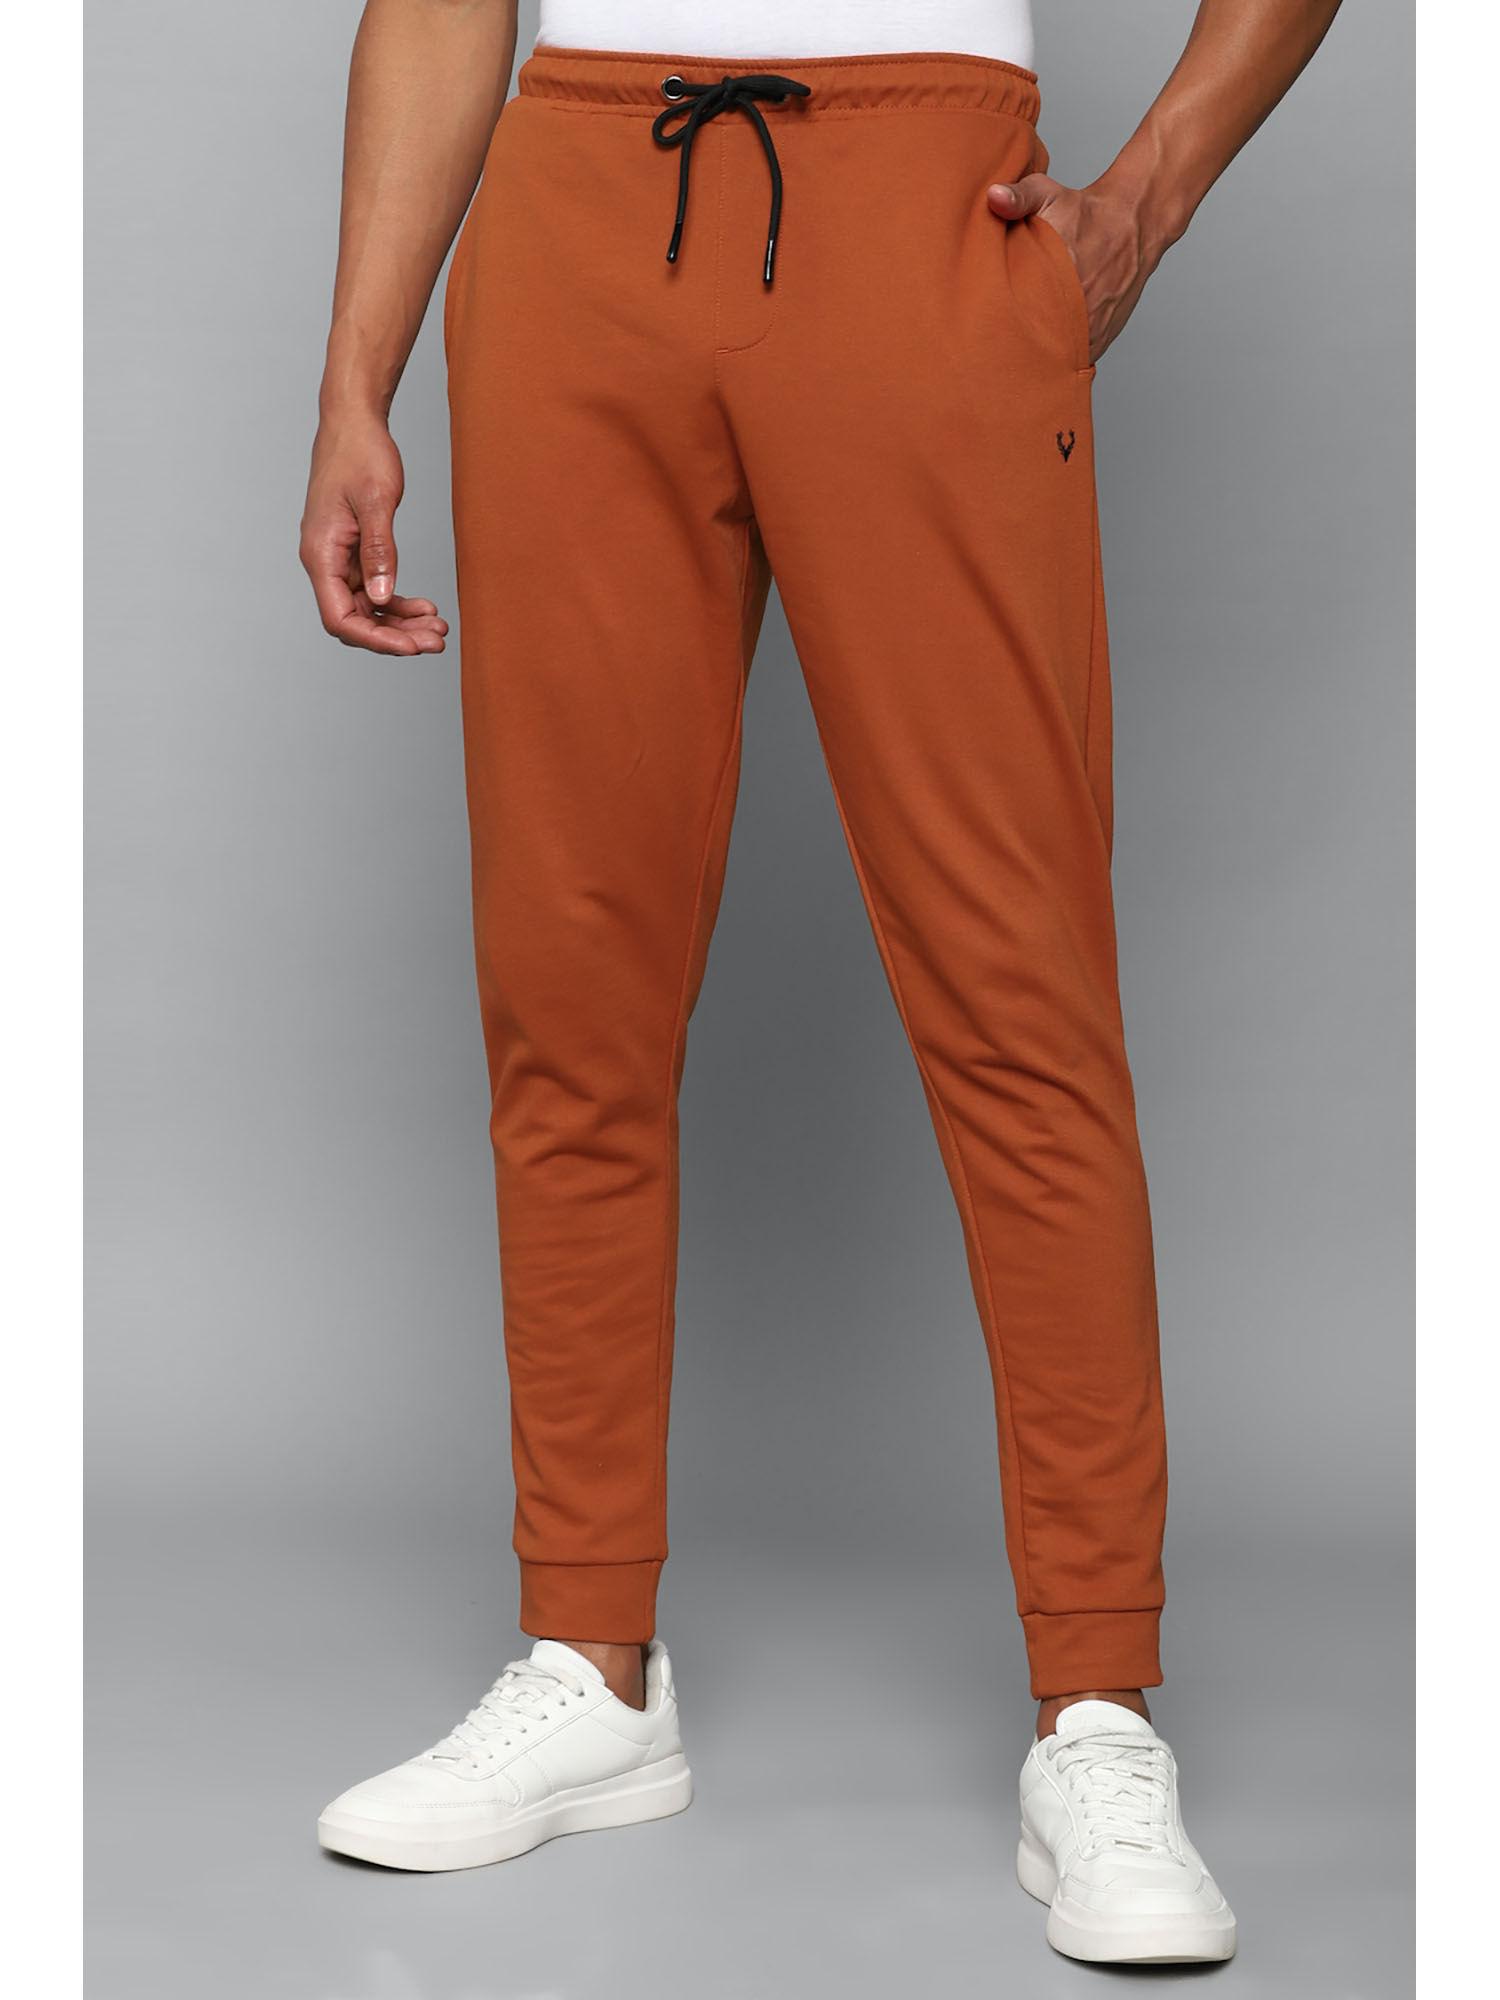 men-solid-regular-fit-orange-joggers-pants